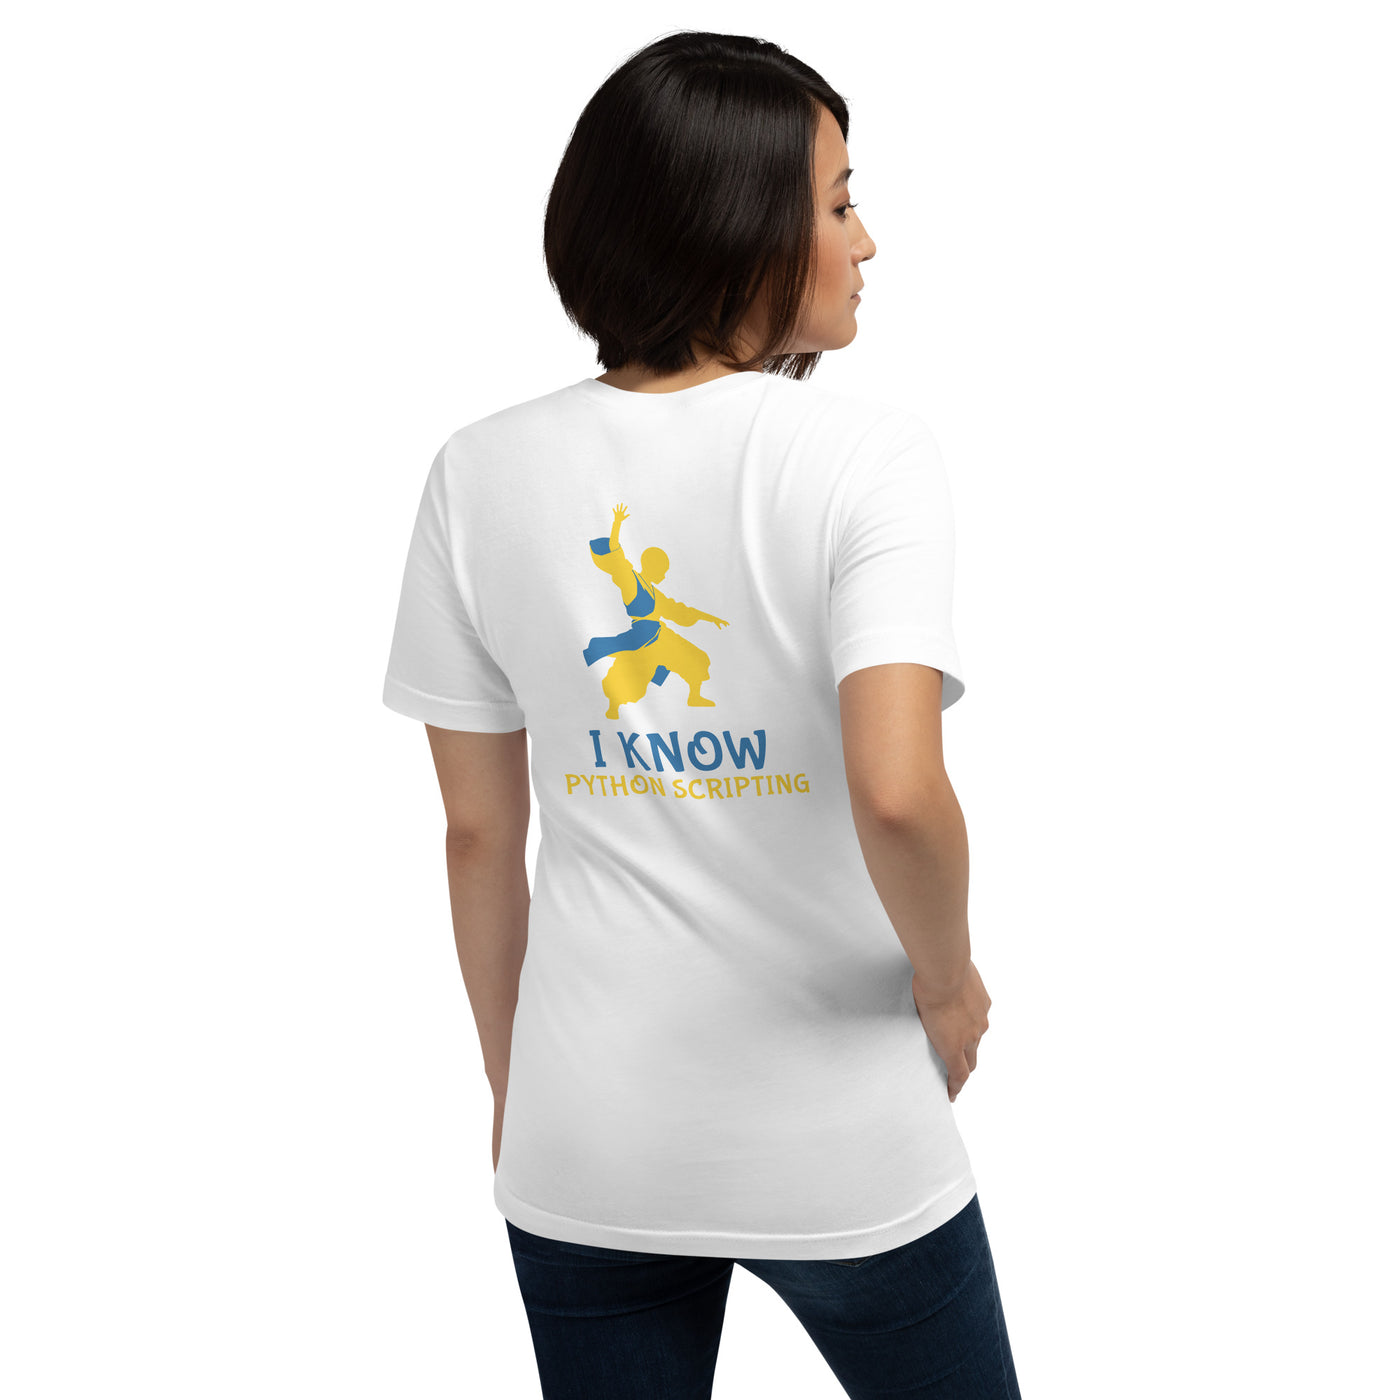 I Know Python Scripting - Unisex t-shirt ( Back Print )